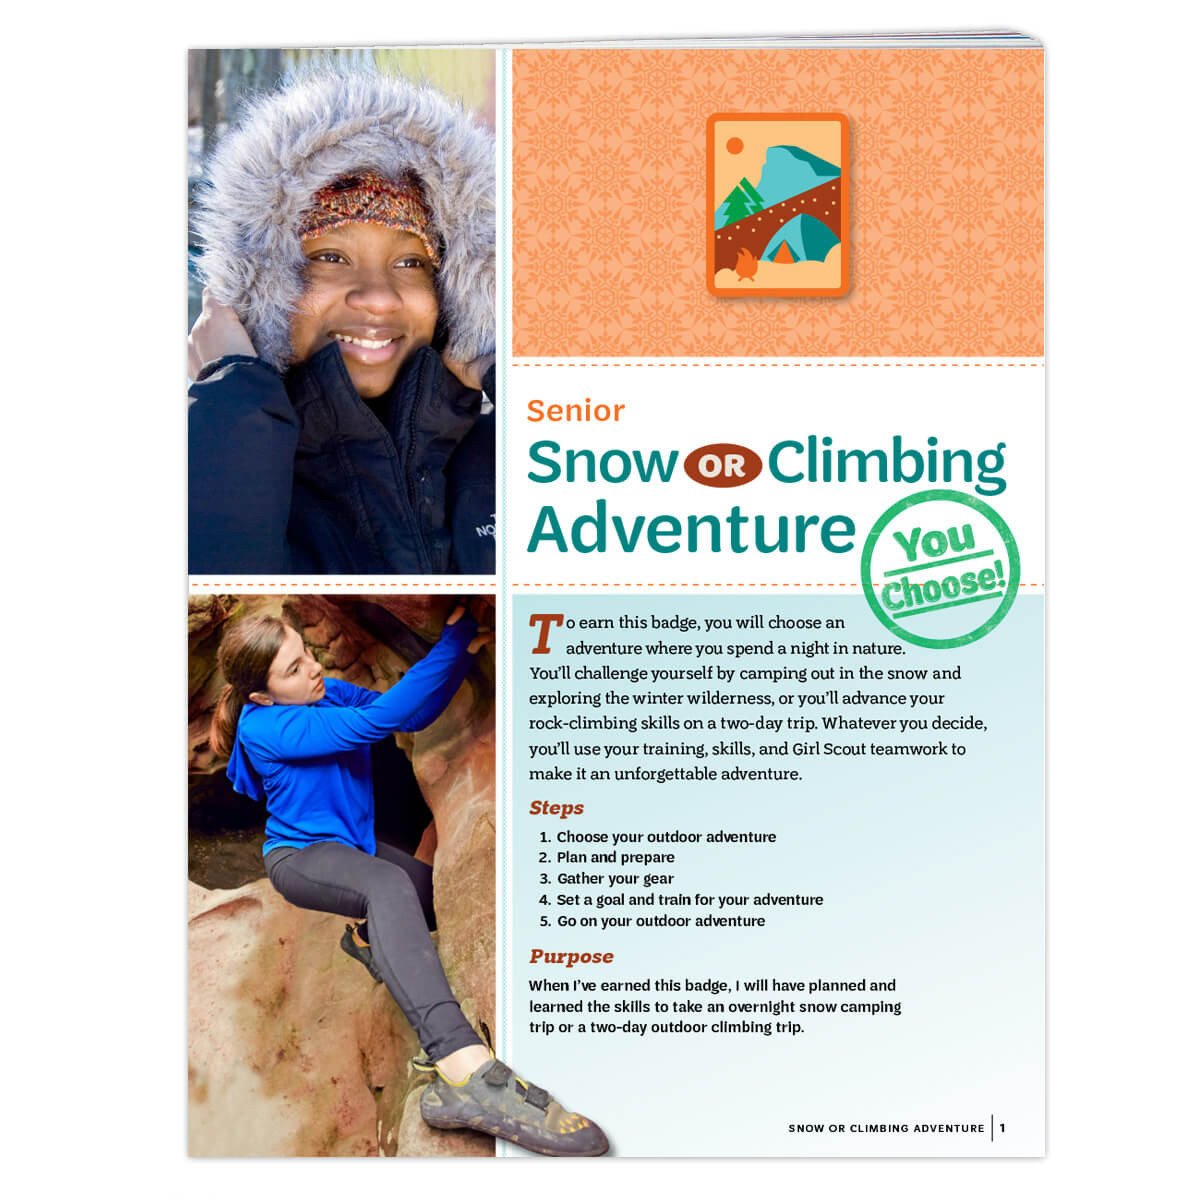 Sr. Snow or Climbing Adventure REQ